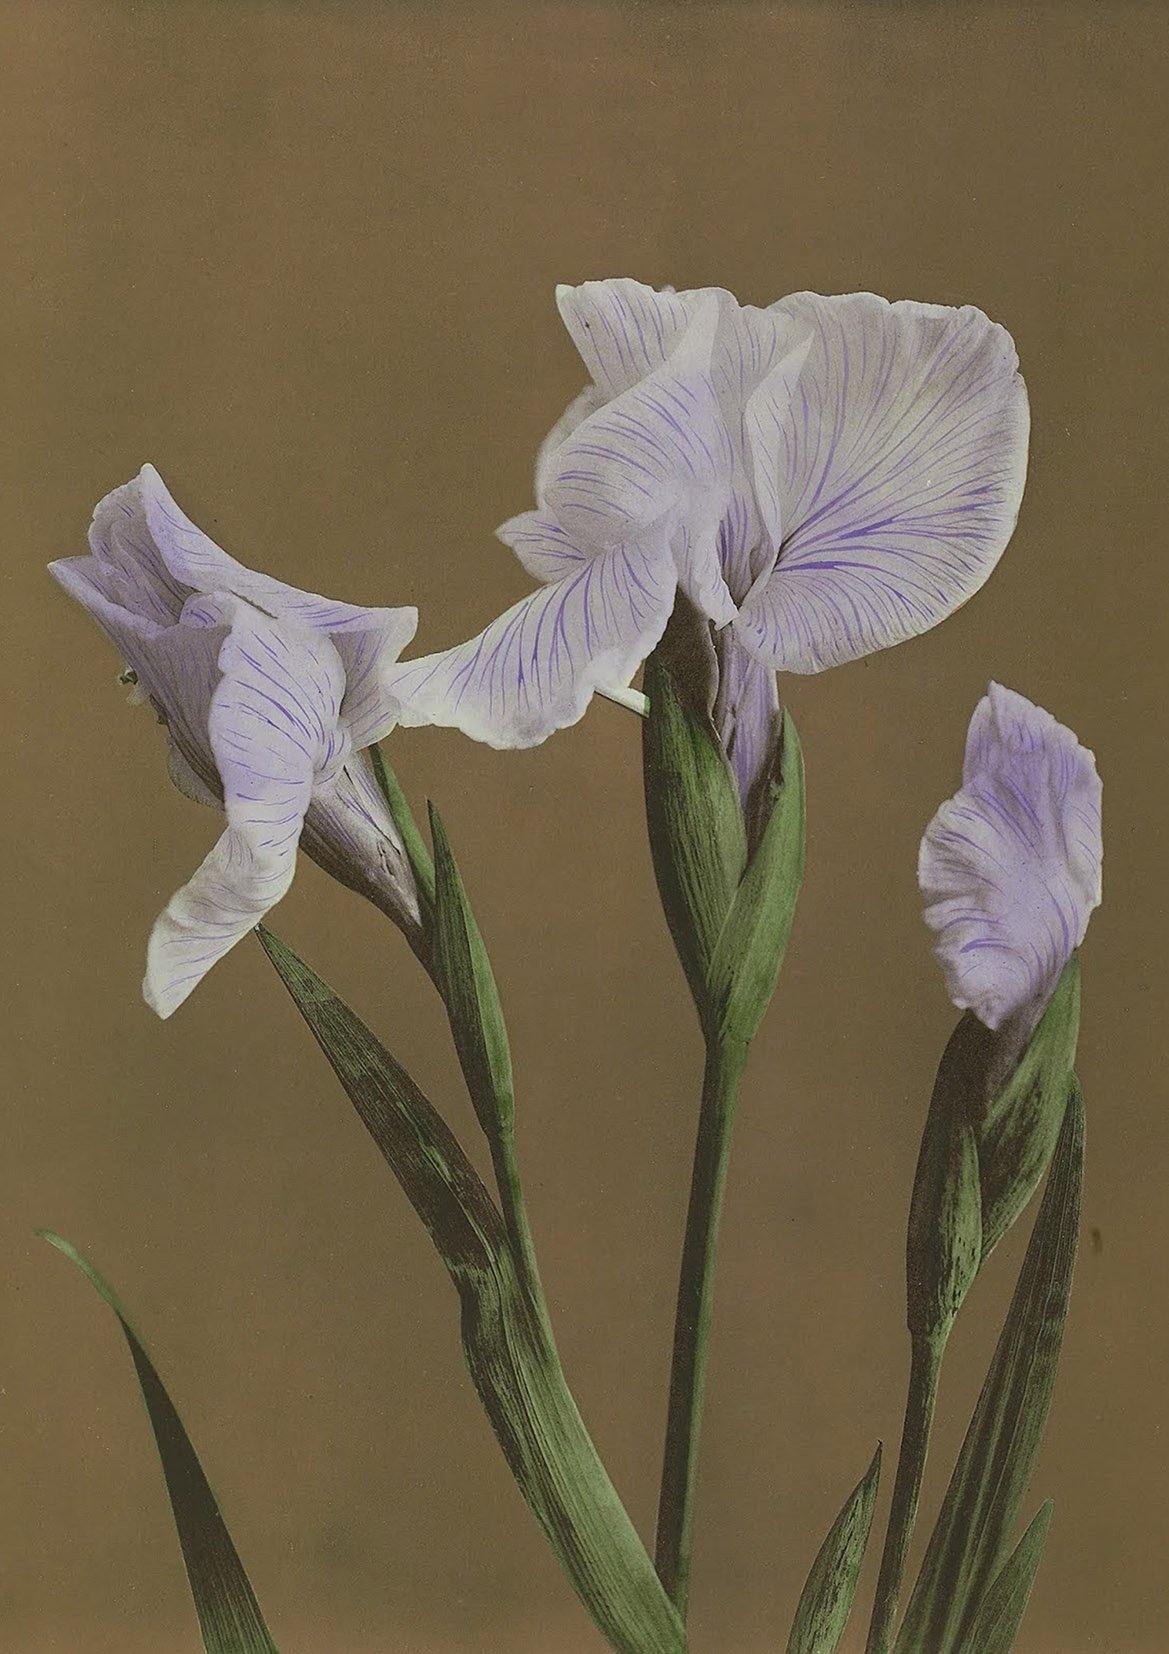 JAPANESE IRIS PRINT: Vintage Flower Art by Kazumasa - Pimlico Prints